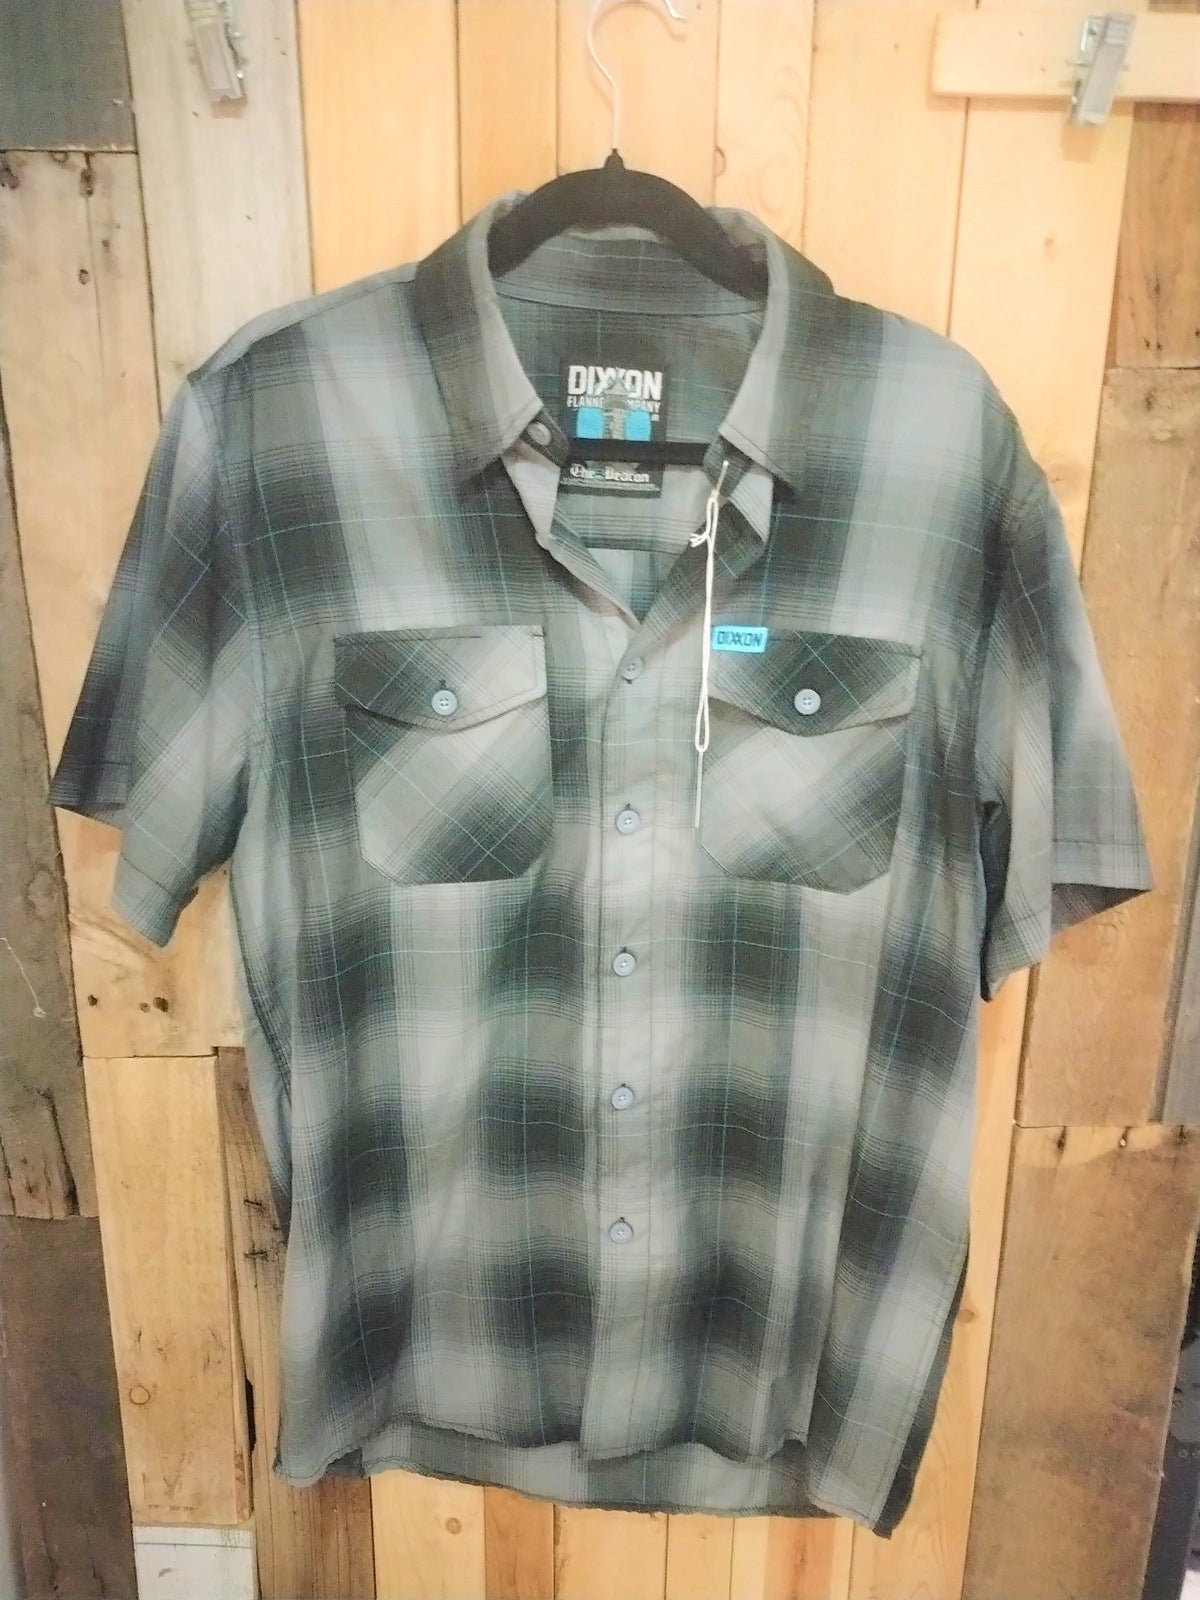 Dixxon Flannel Company "The Beacon" Men's Plaid Short Sleeve Button Up Shirt Size XL